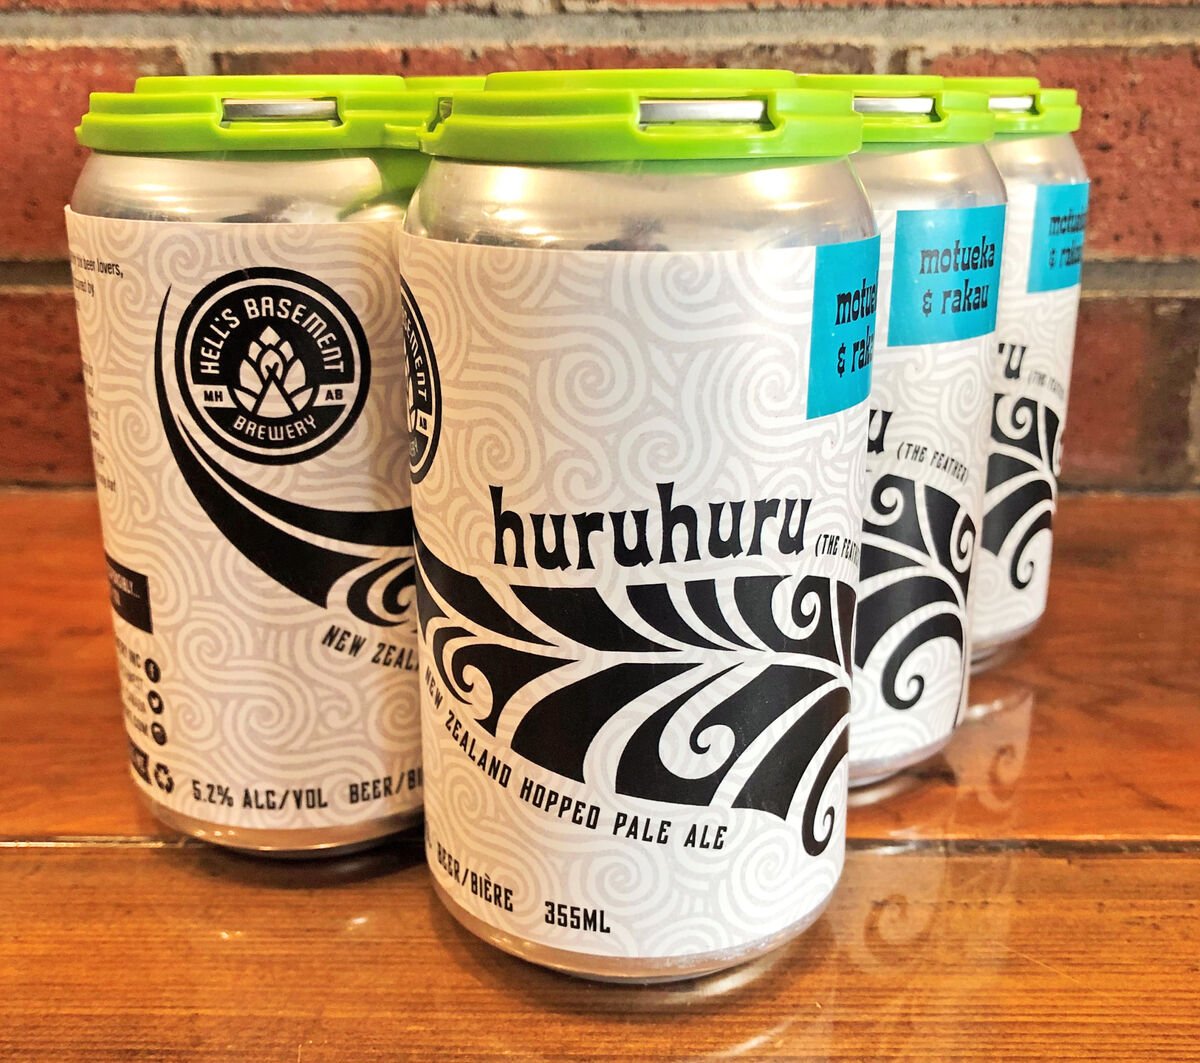 huruhuru beer cans